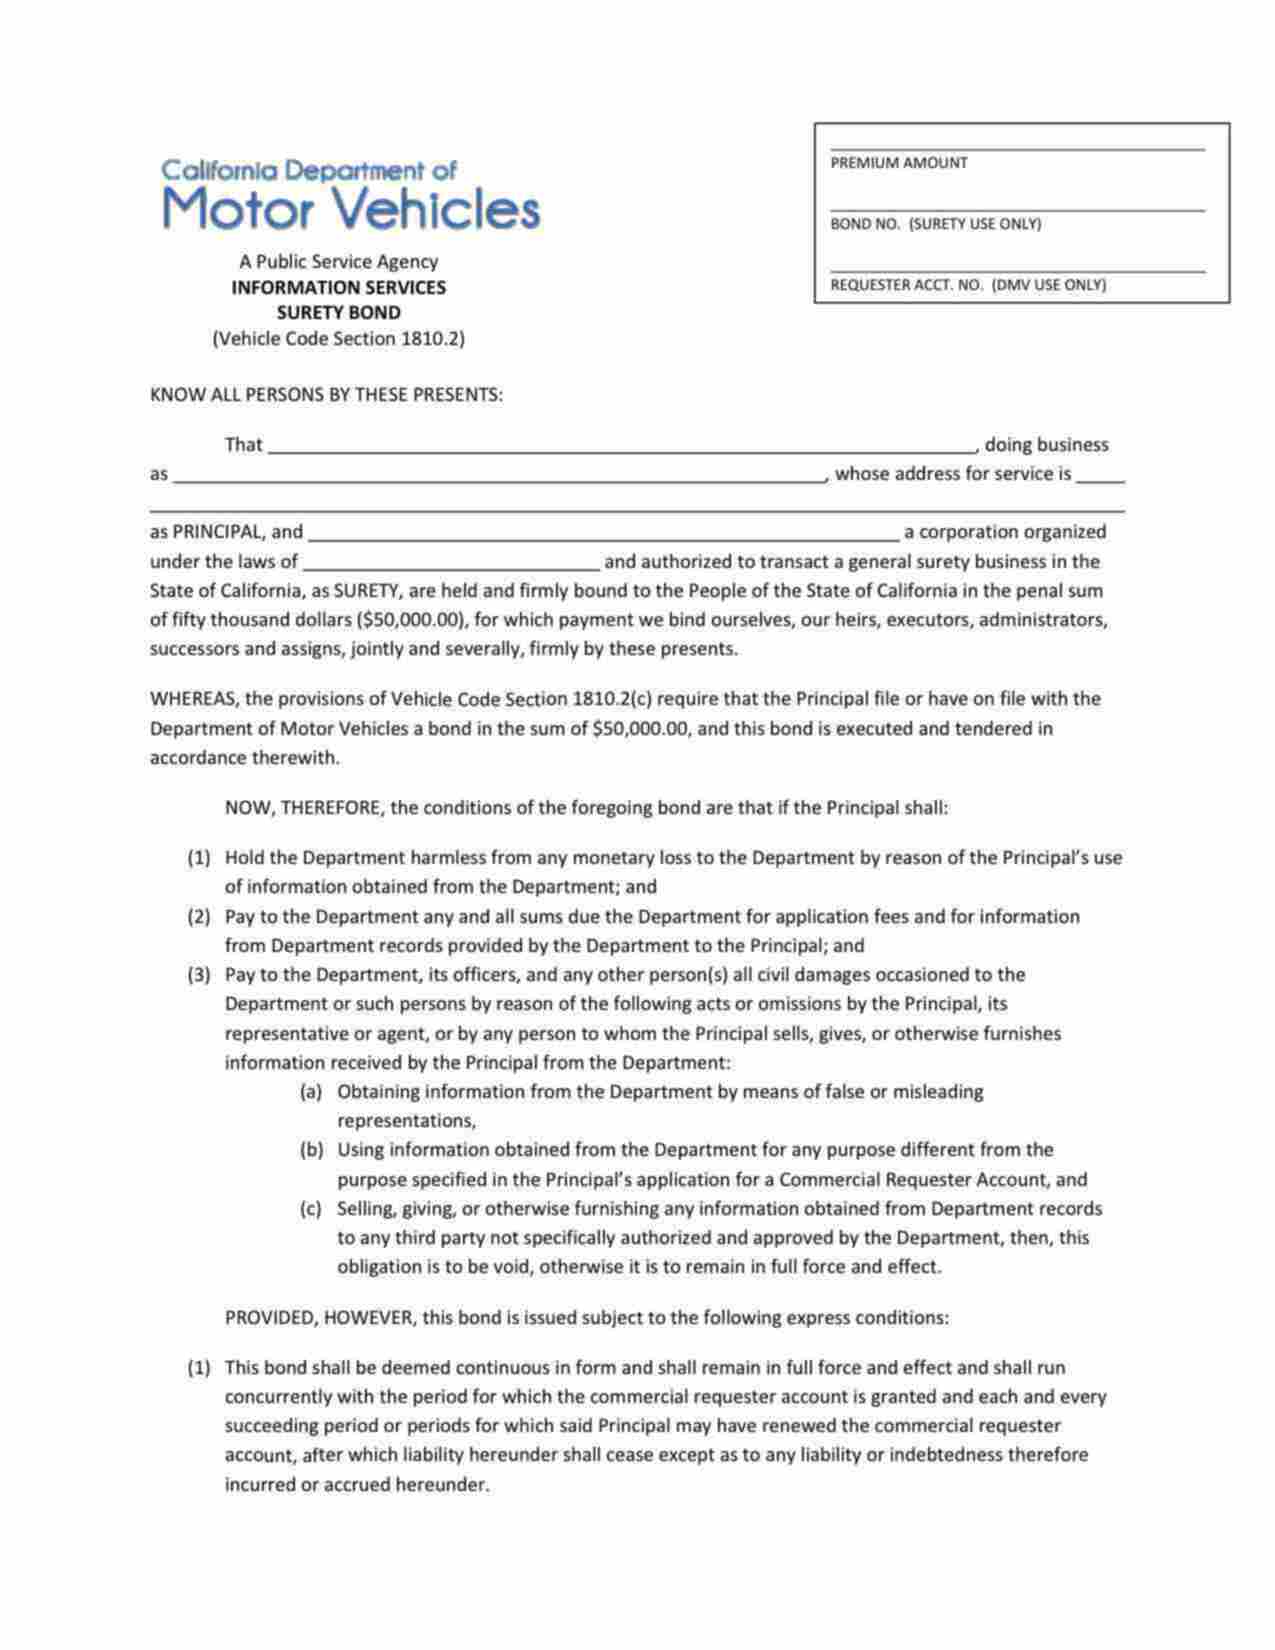 California Auto Information Services Bond Form